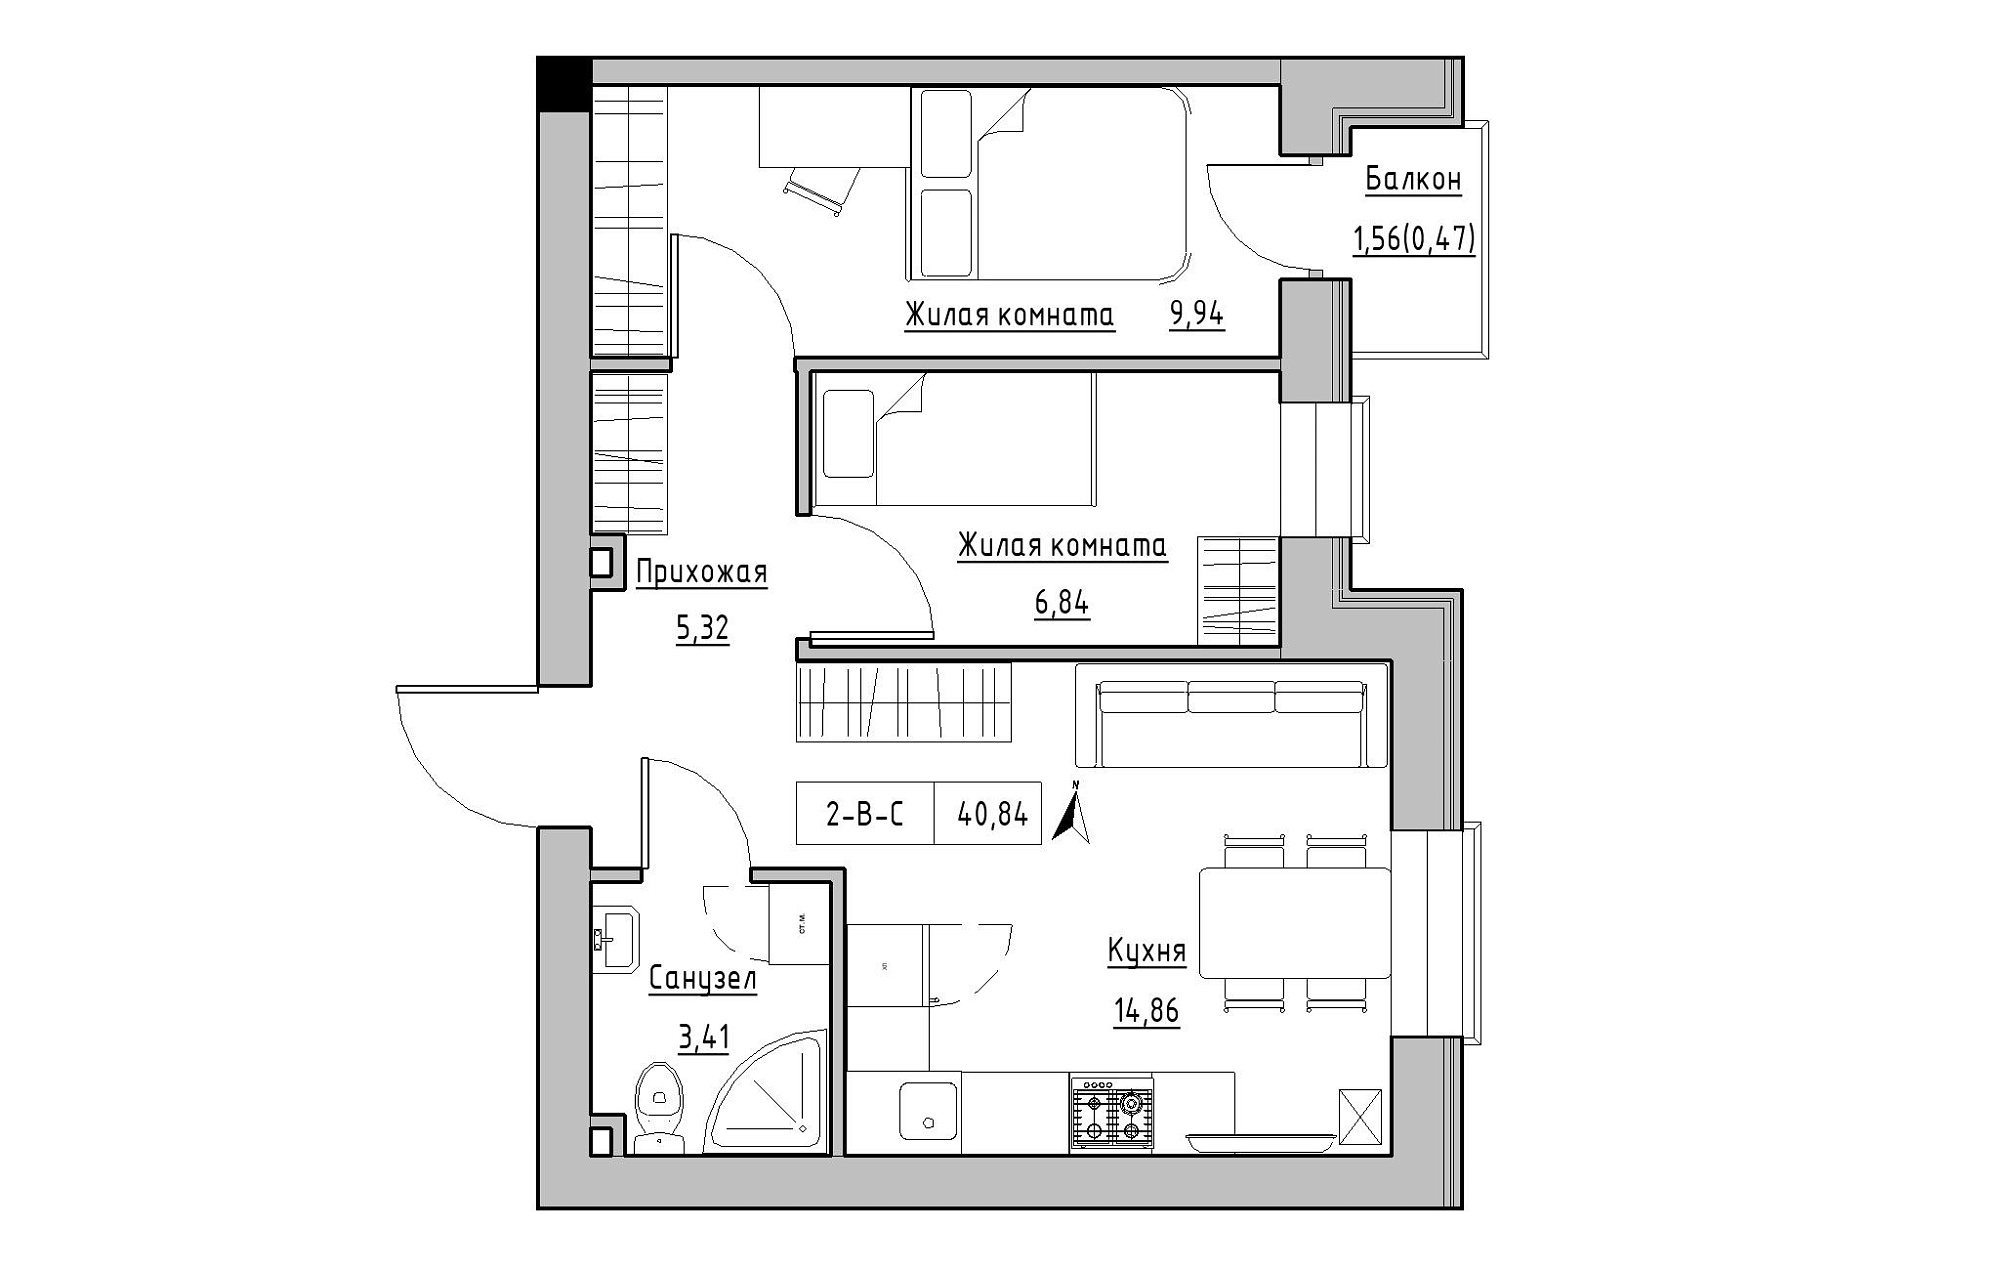 Planning 2-rm flats area 40.84m2, KS-019-02/0006.